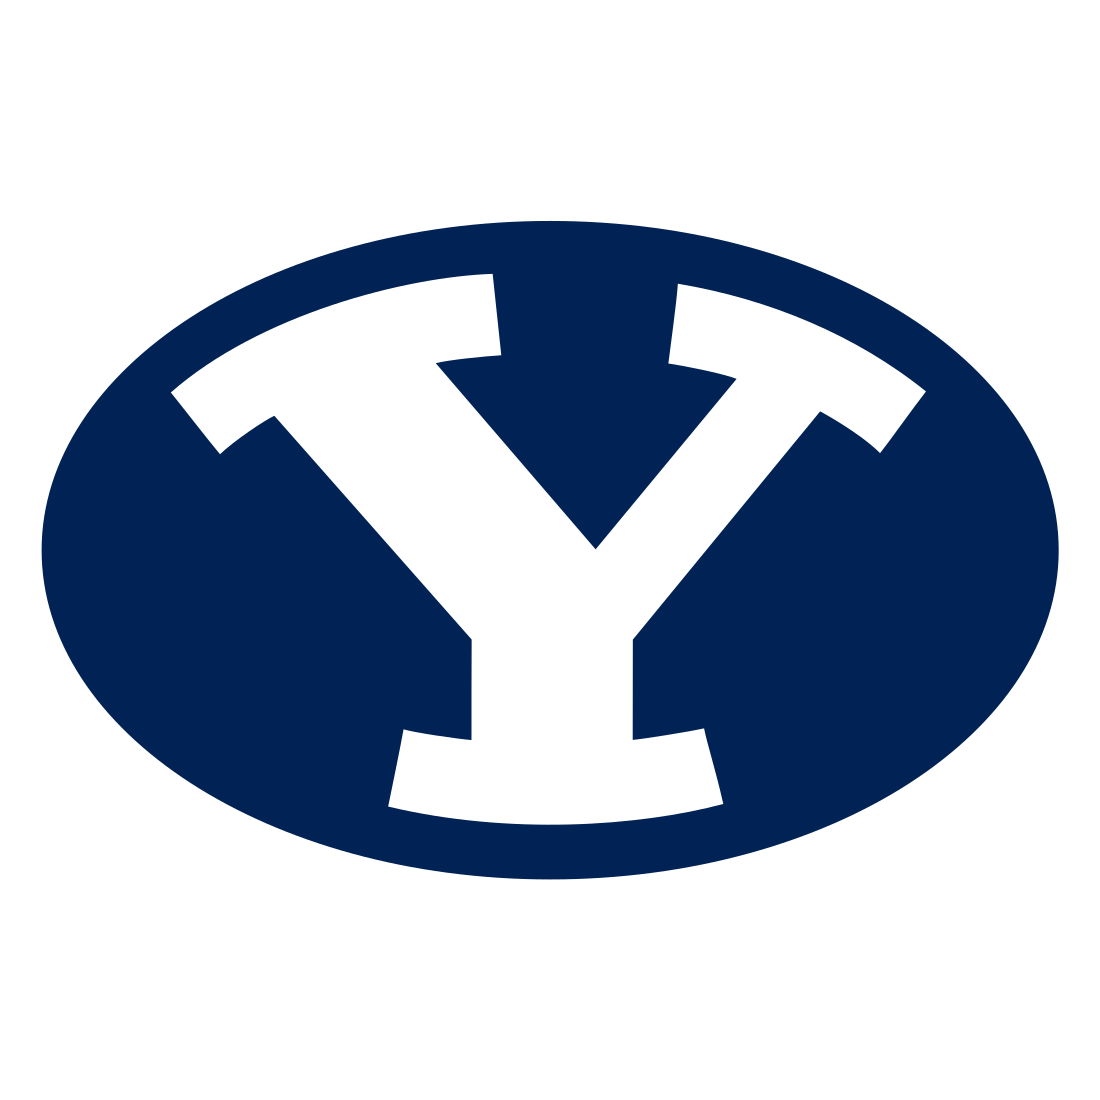 Brigham Young (BYU) Cougars logo